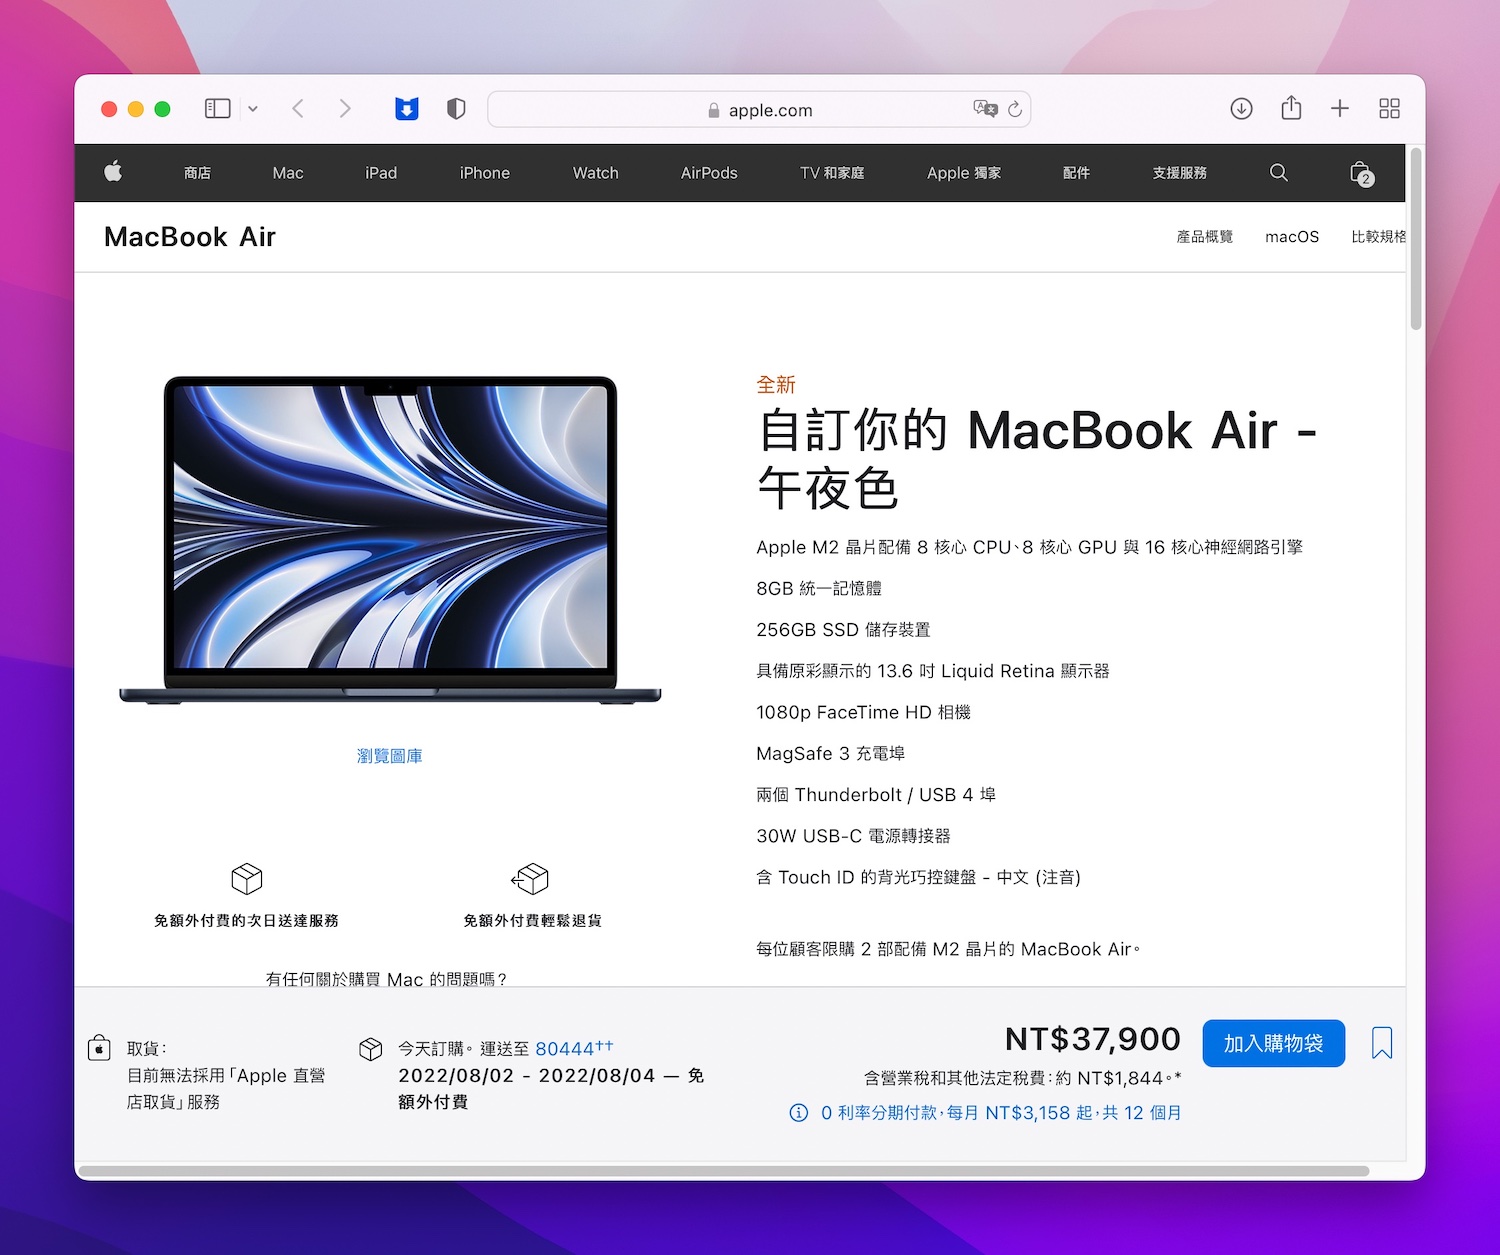 M2 MacBook Air 台灣開賣